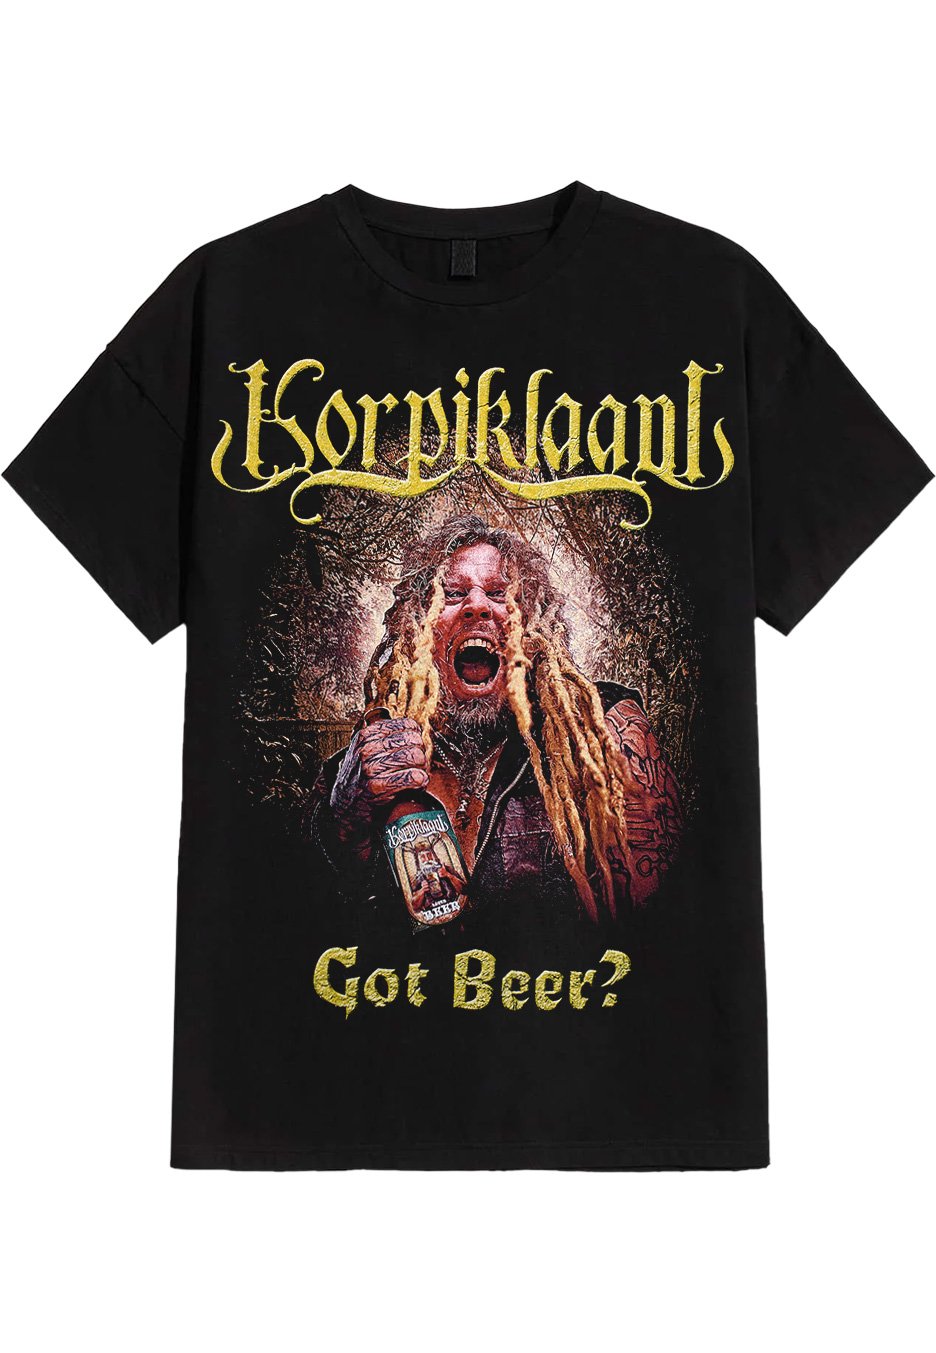 Korpiklaani - Got Beer? - T-Shirt | Neutral-Image